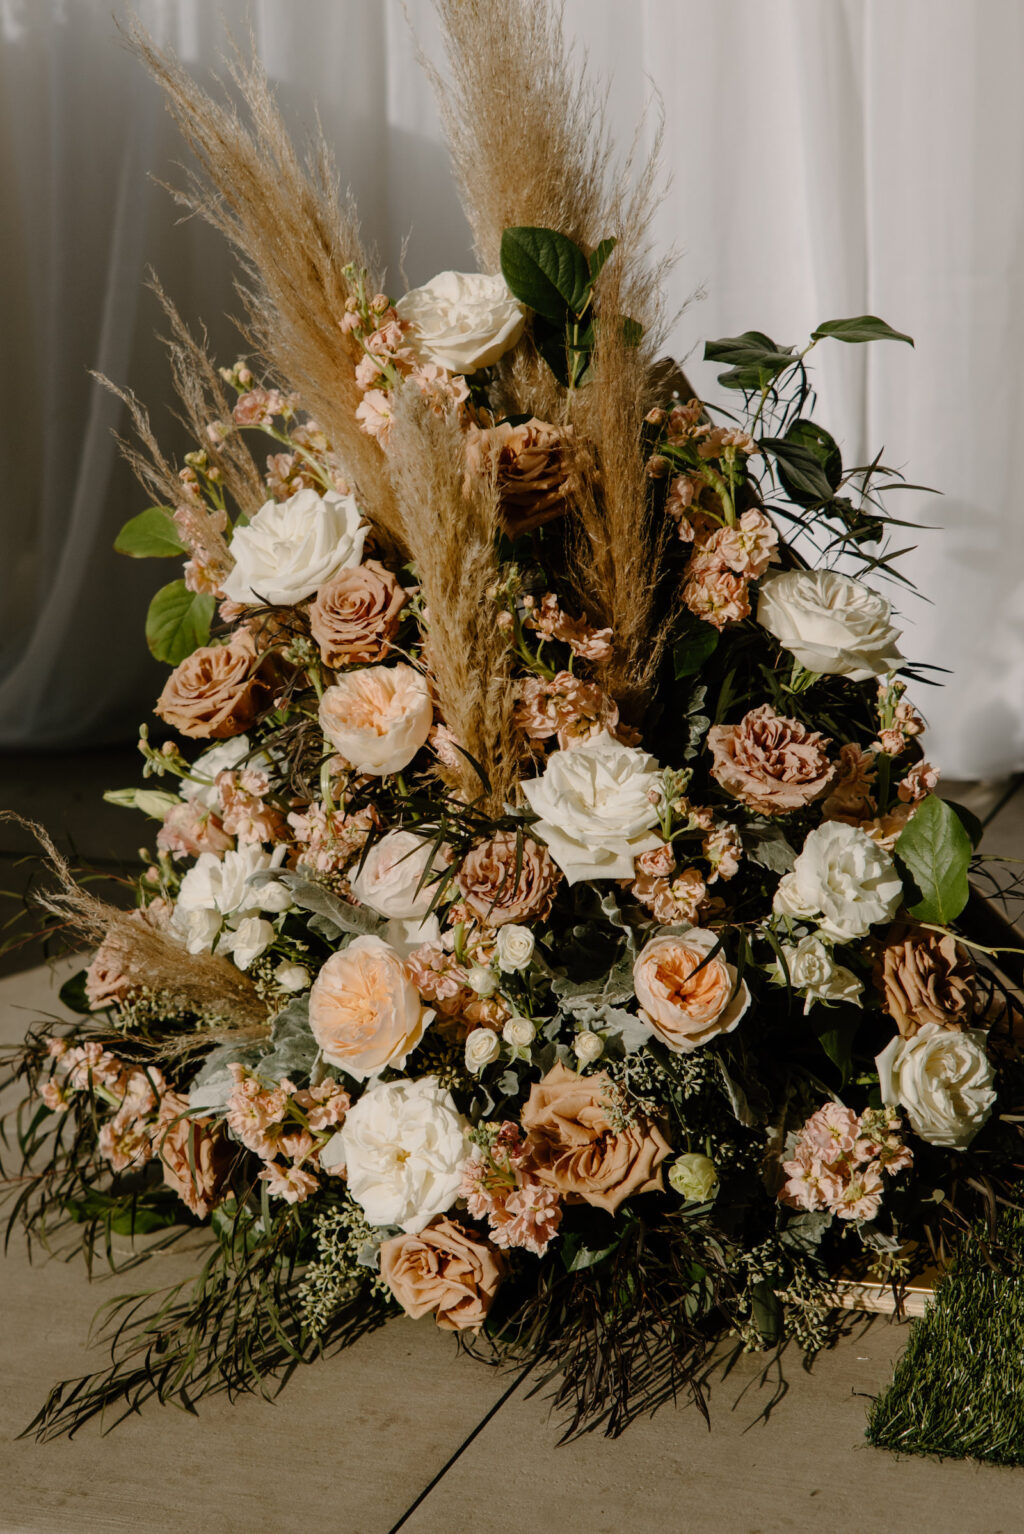 Blush Pink, Ivory and Mauve Roses, Greenery, Pampas Grass Lush Flowers | Tampa Bay Wedding Florist Iza's Flowers